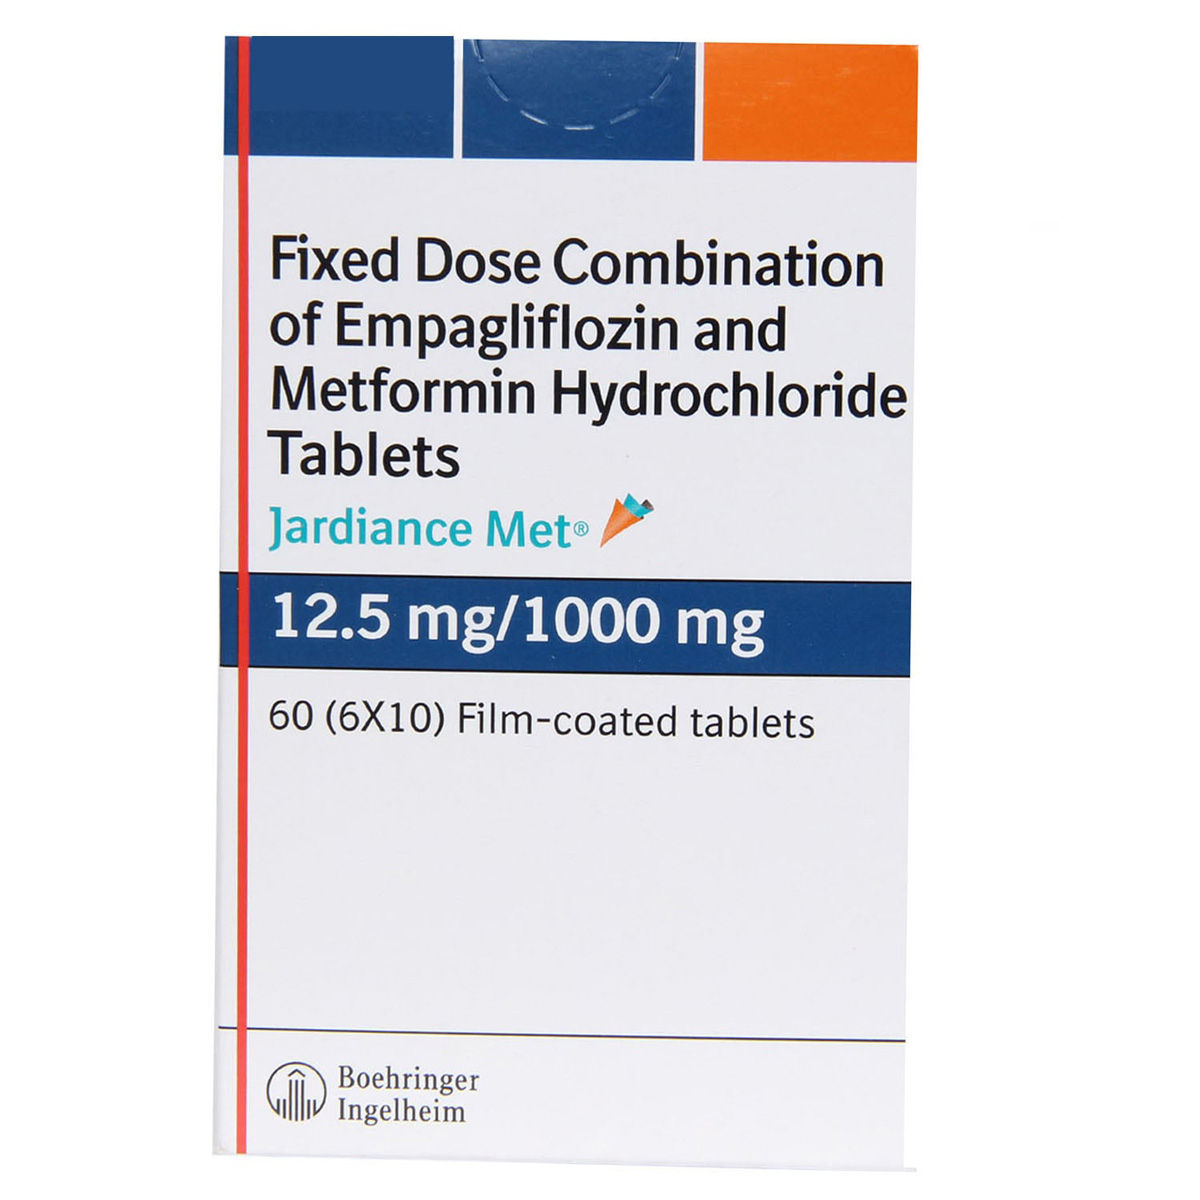 Jardiance Met 12.5 mg/1000 mg Tablet | Uses, Side Effects, Price